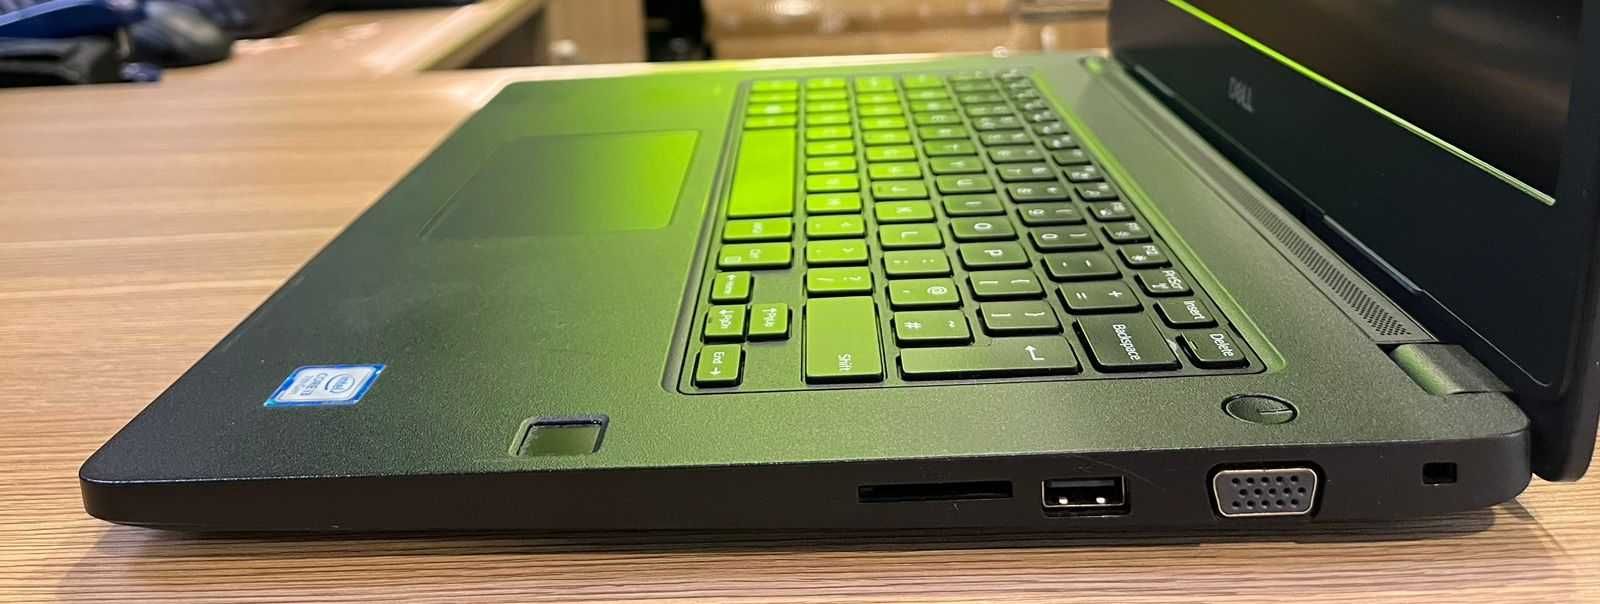 Ноутбук Dell Latitude 3480 (Core i3-7100U - 2.4GHz 2/4) г. Алматы.